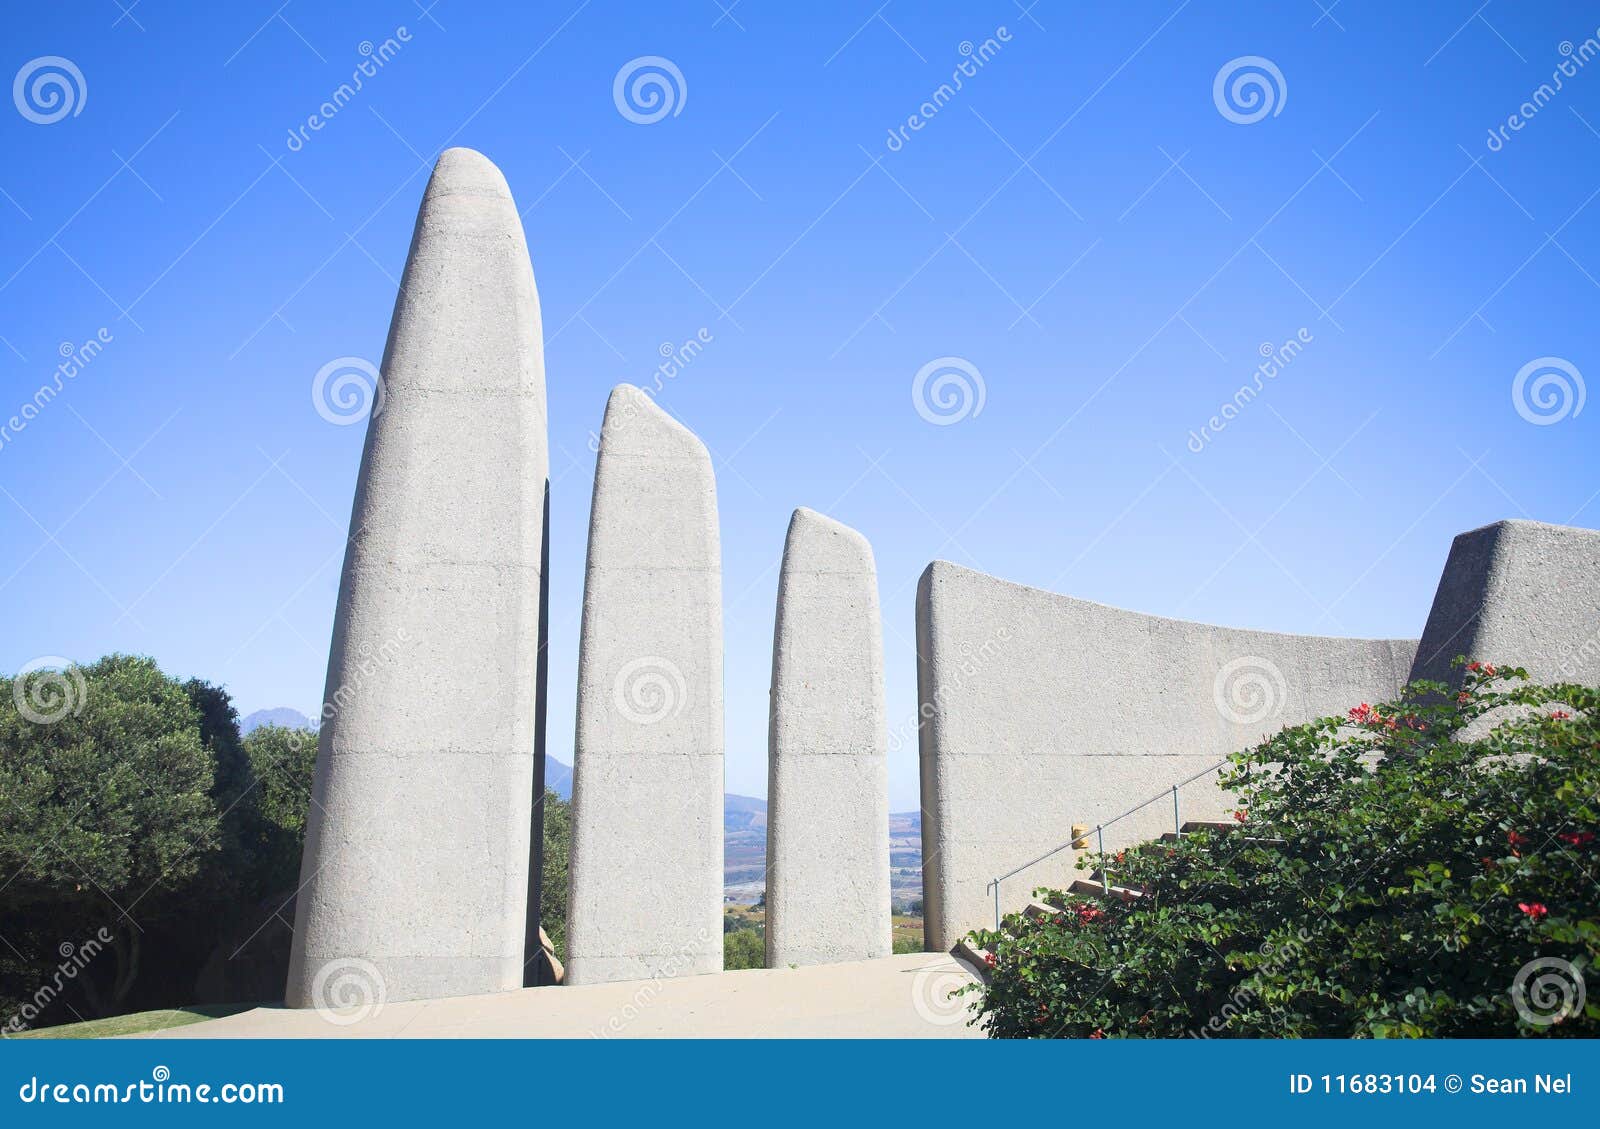 landmark of the afrikaans language monument